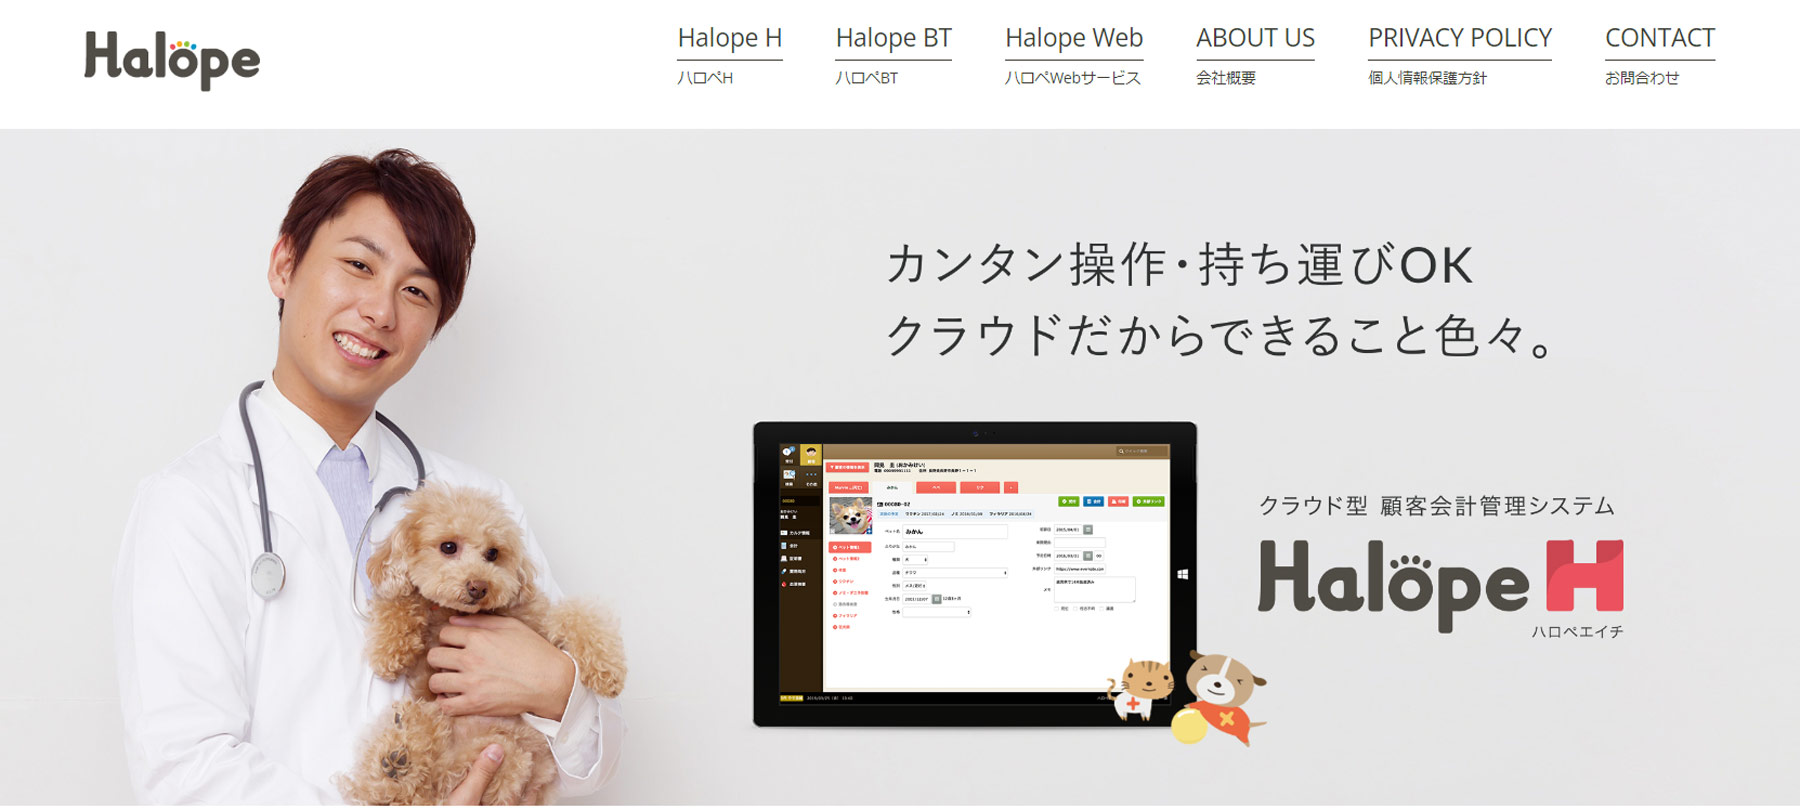 HalopeH公式Webサイト